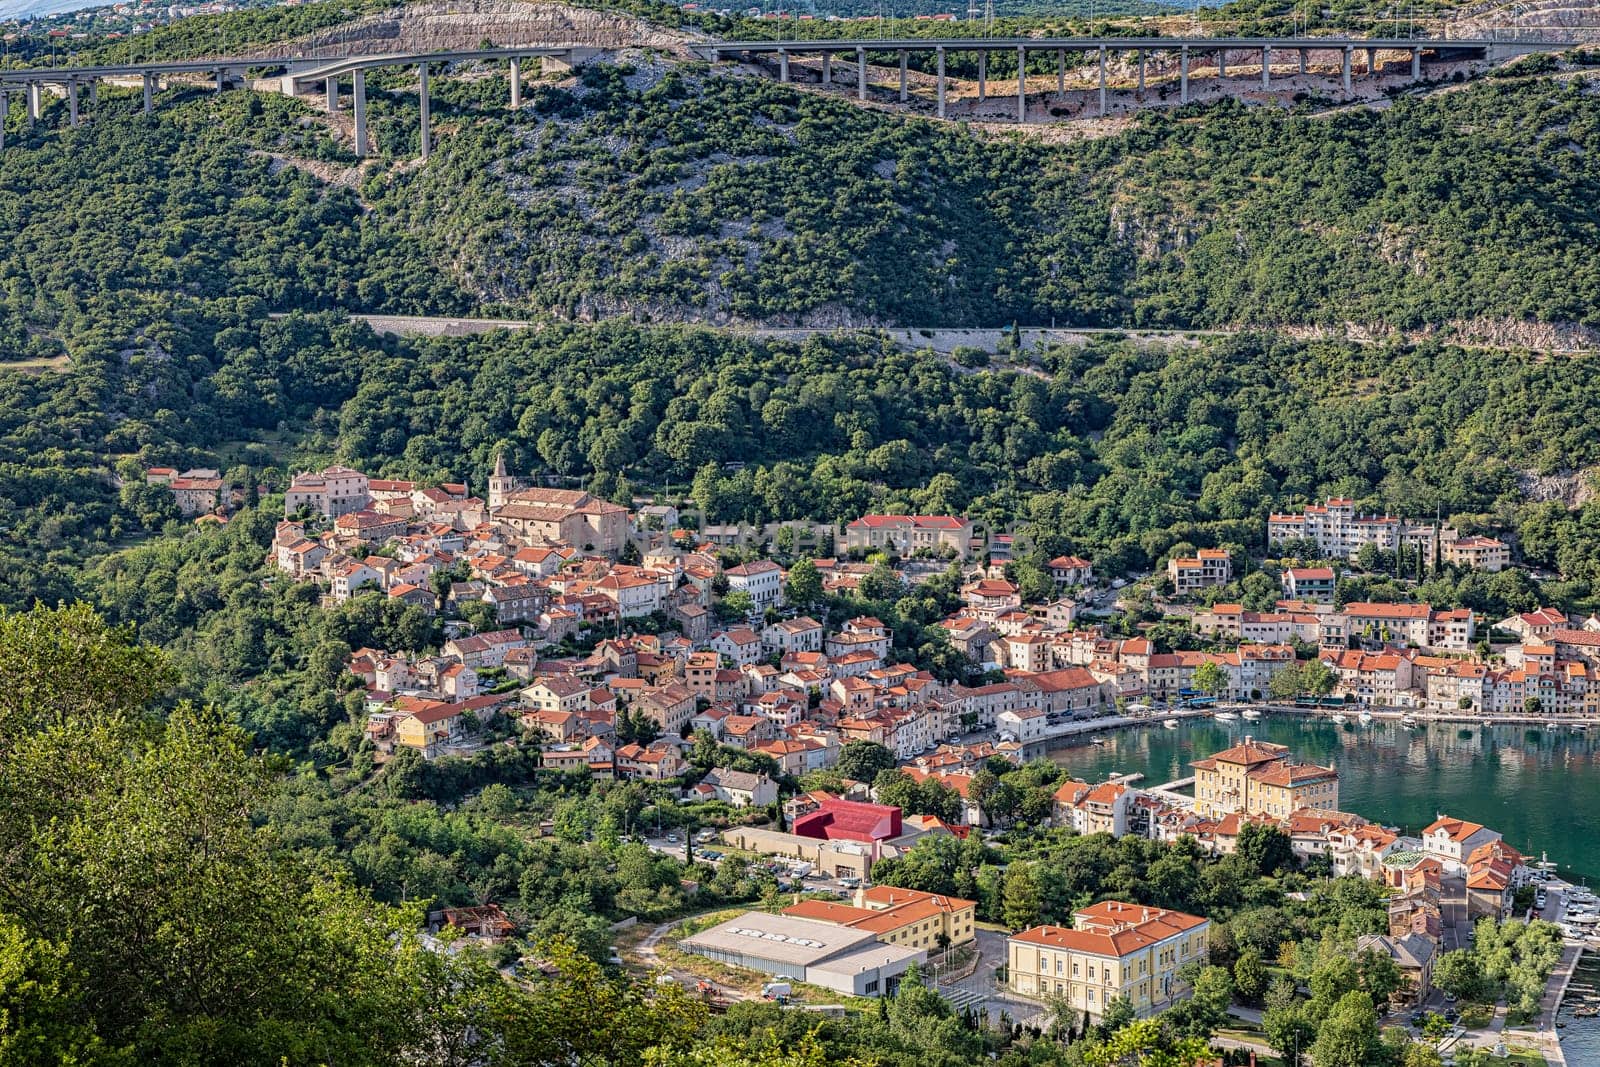 Historic town of Bakar in green forest, Croatia by mot1963